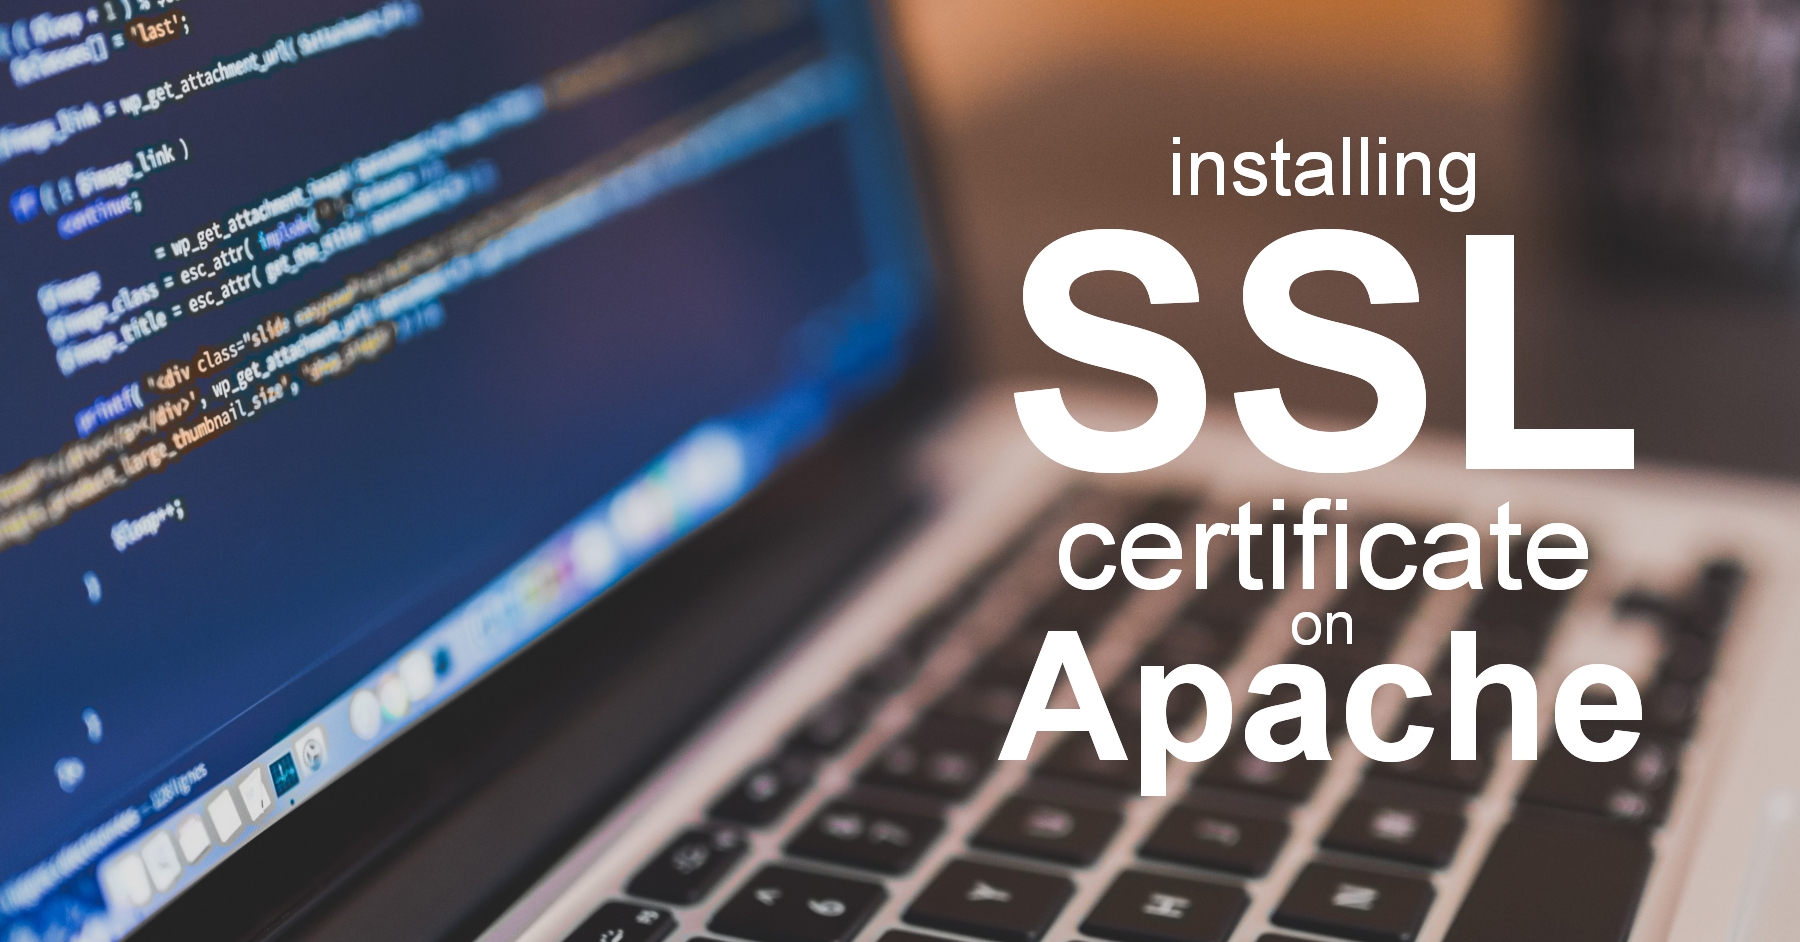 Installing SSL certificate on Apache